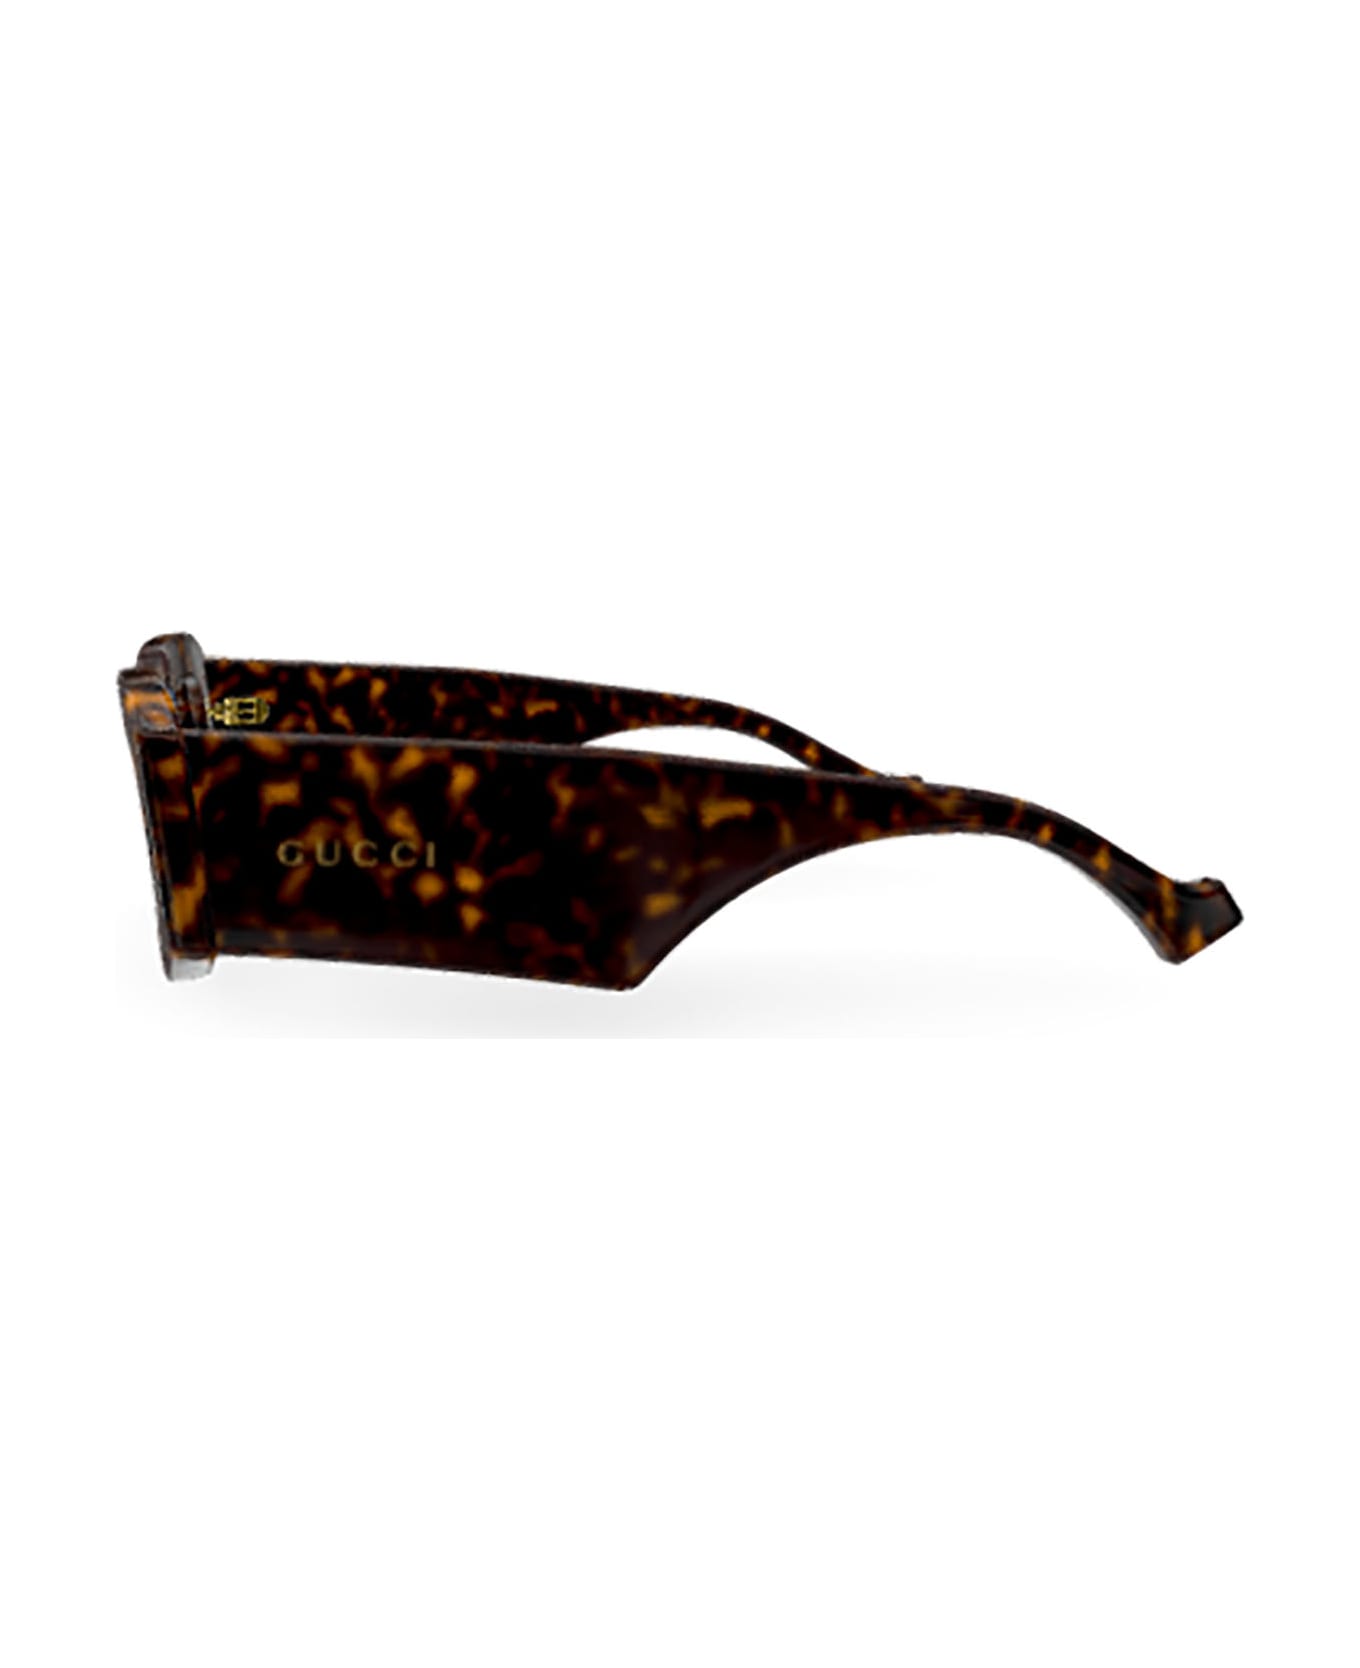 Gucci Eyewear Gg1426s Sunglasses - 002 havana havana brown サングラス